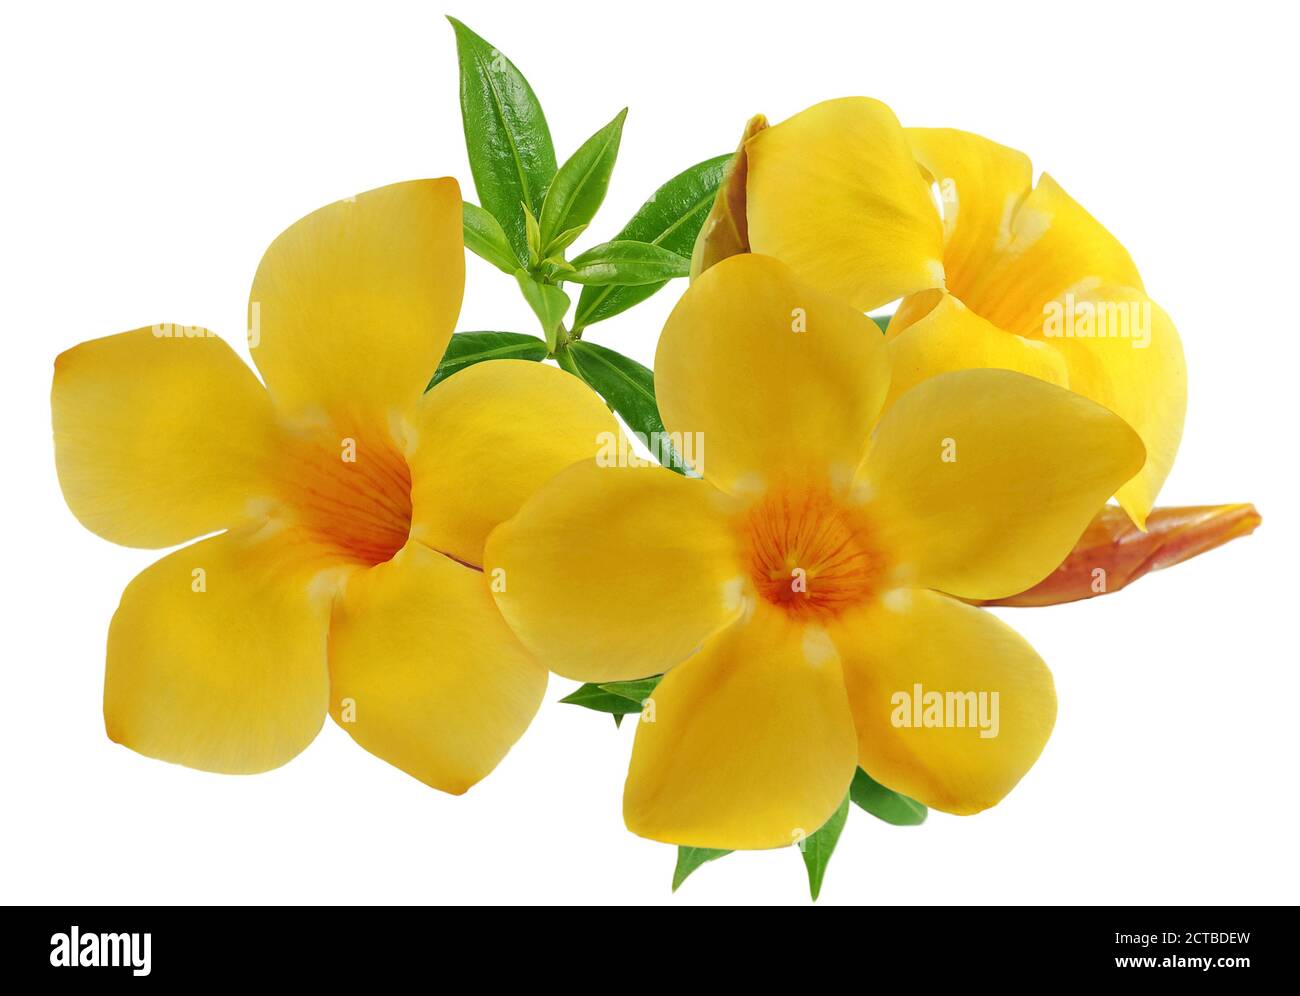 Allamanda flower or Golden Trumpet flower isolated on white background Stock Photo